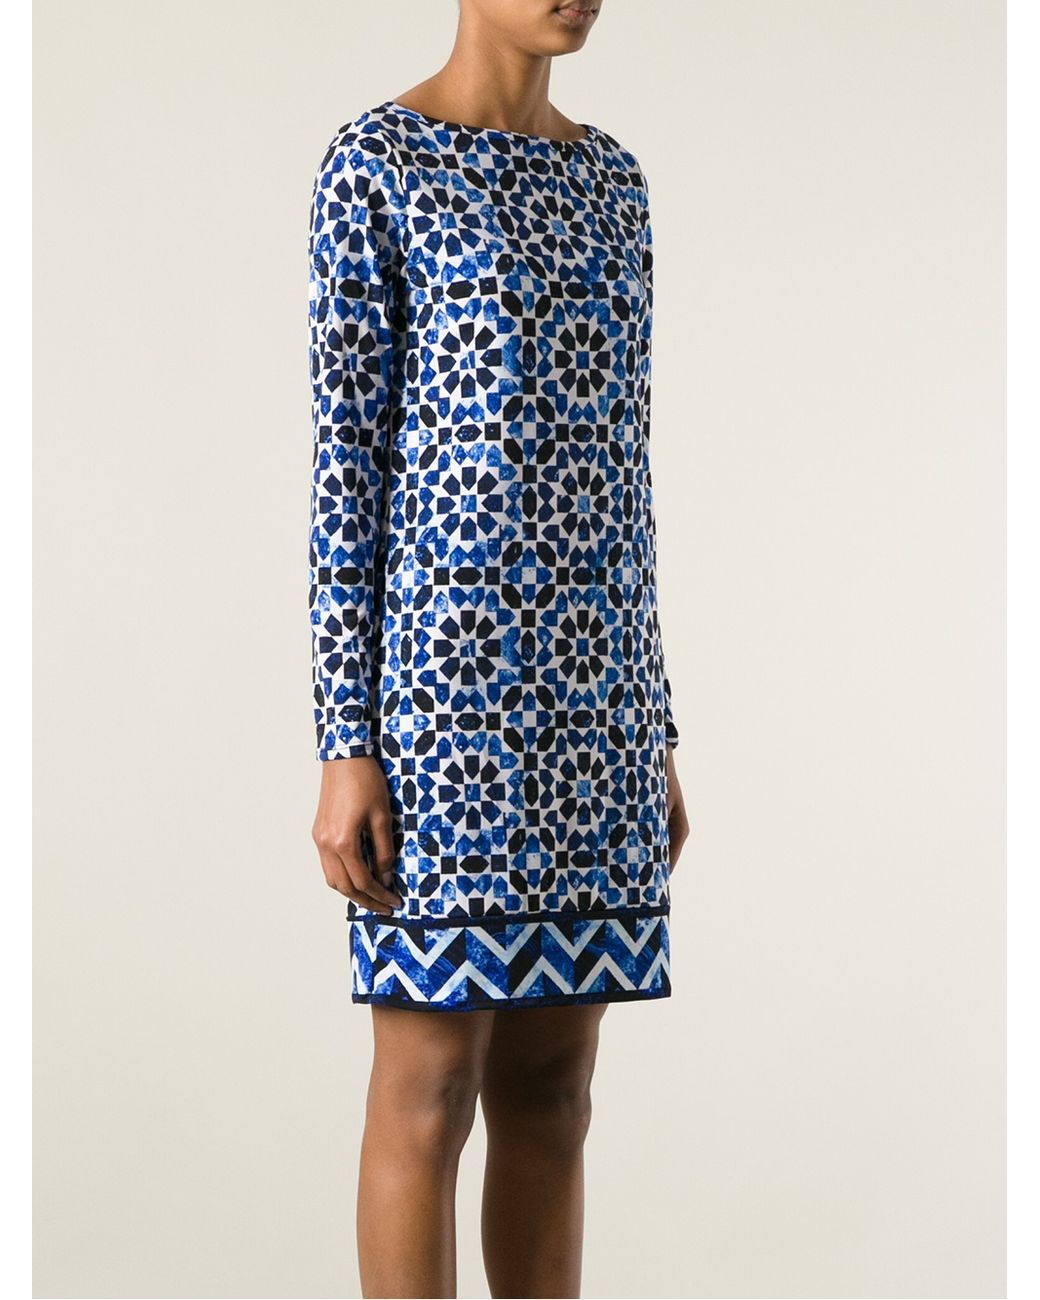 MICHAEL Michael Kors Geometric Print Shift Dress in Blue | Lyst